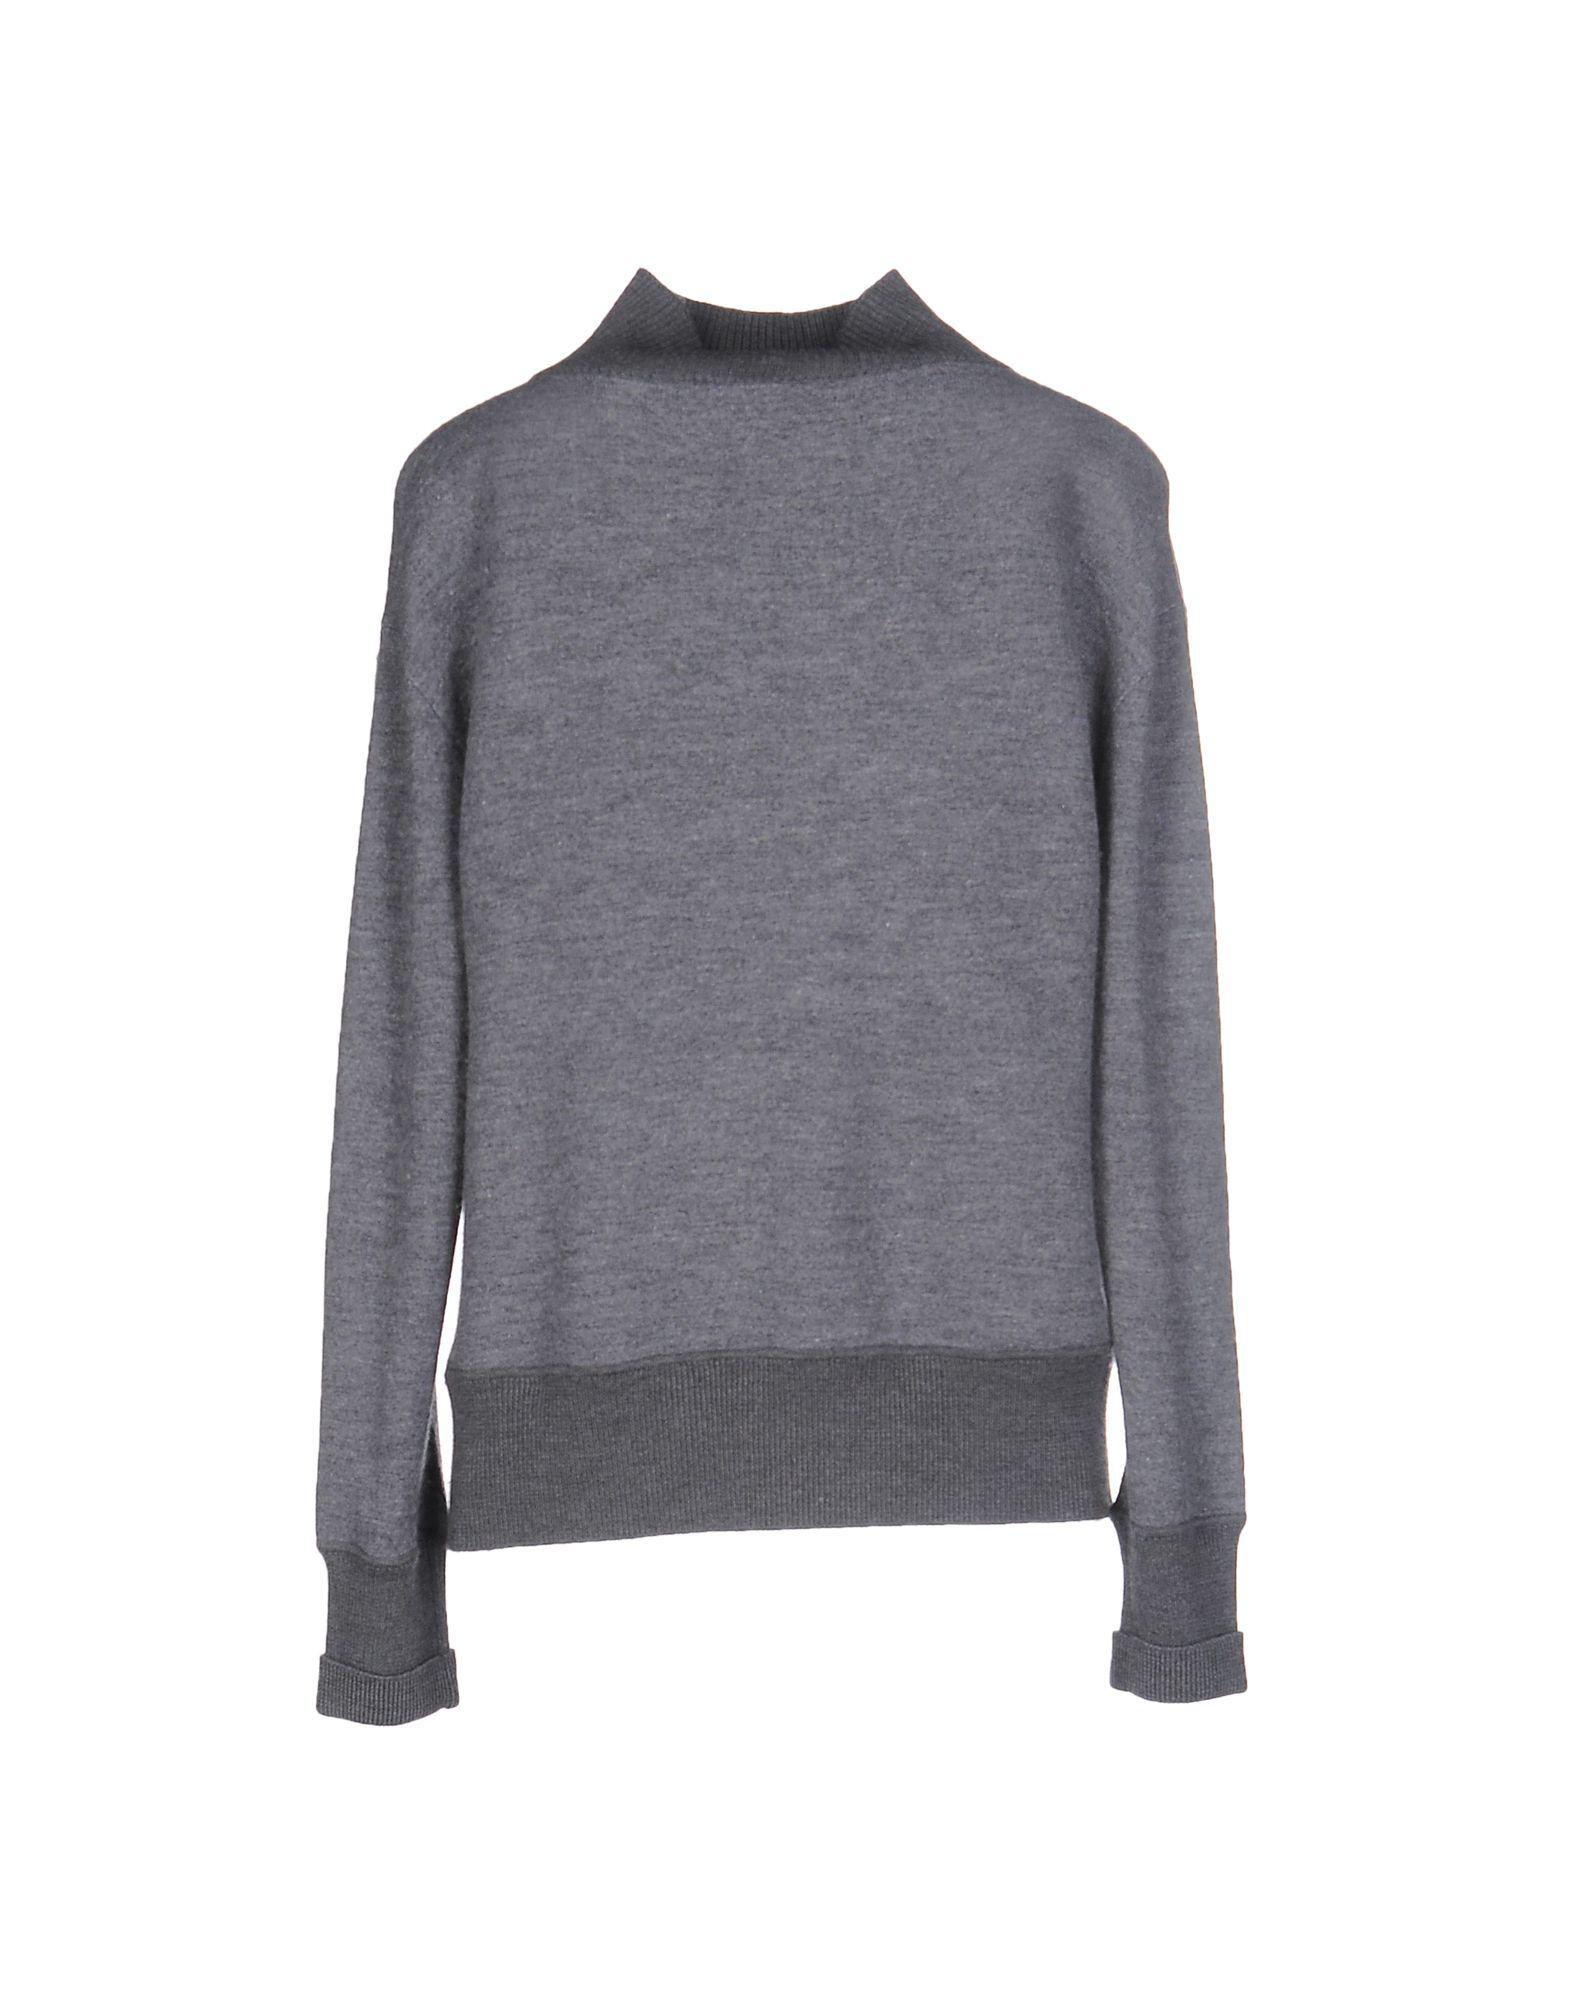 Burberry Wool Turtleneck in Grey (Gray) - Lyst